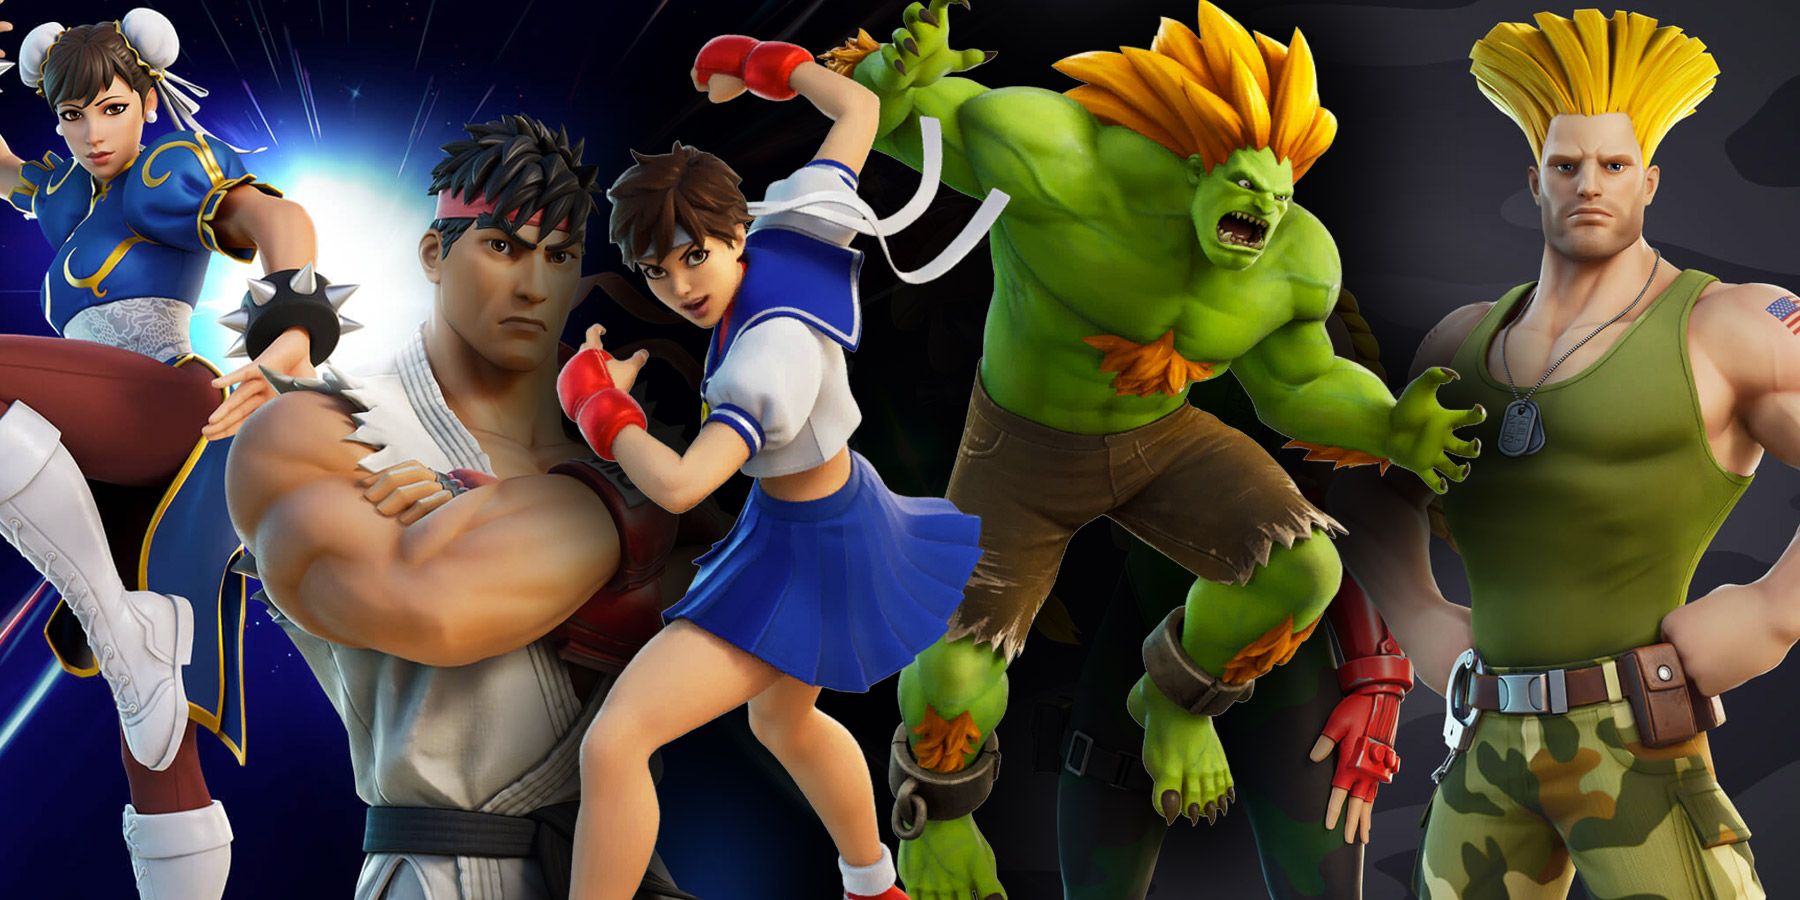 Fortnite's bringing Street Fighter's Blanka and Sakura to the game